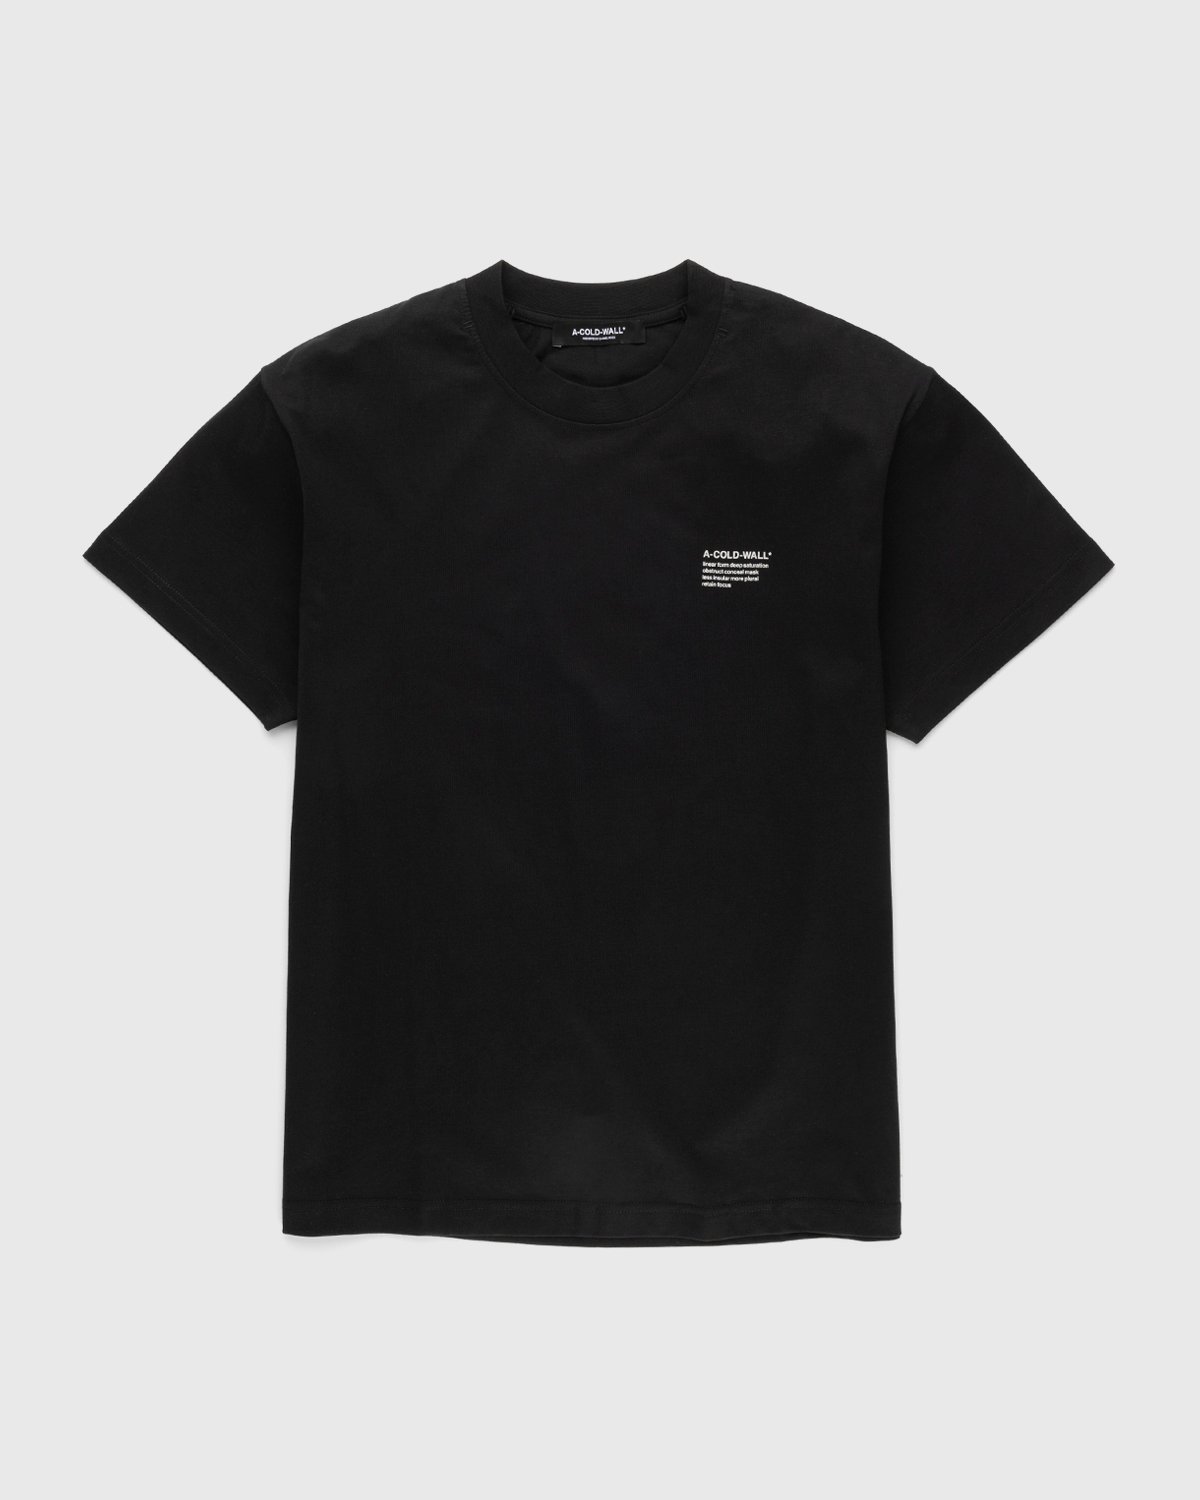 A-Cold-Wall* - Prose T-Shirt Black - Clothing - Black - Image 1